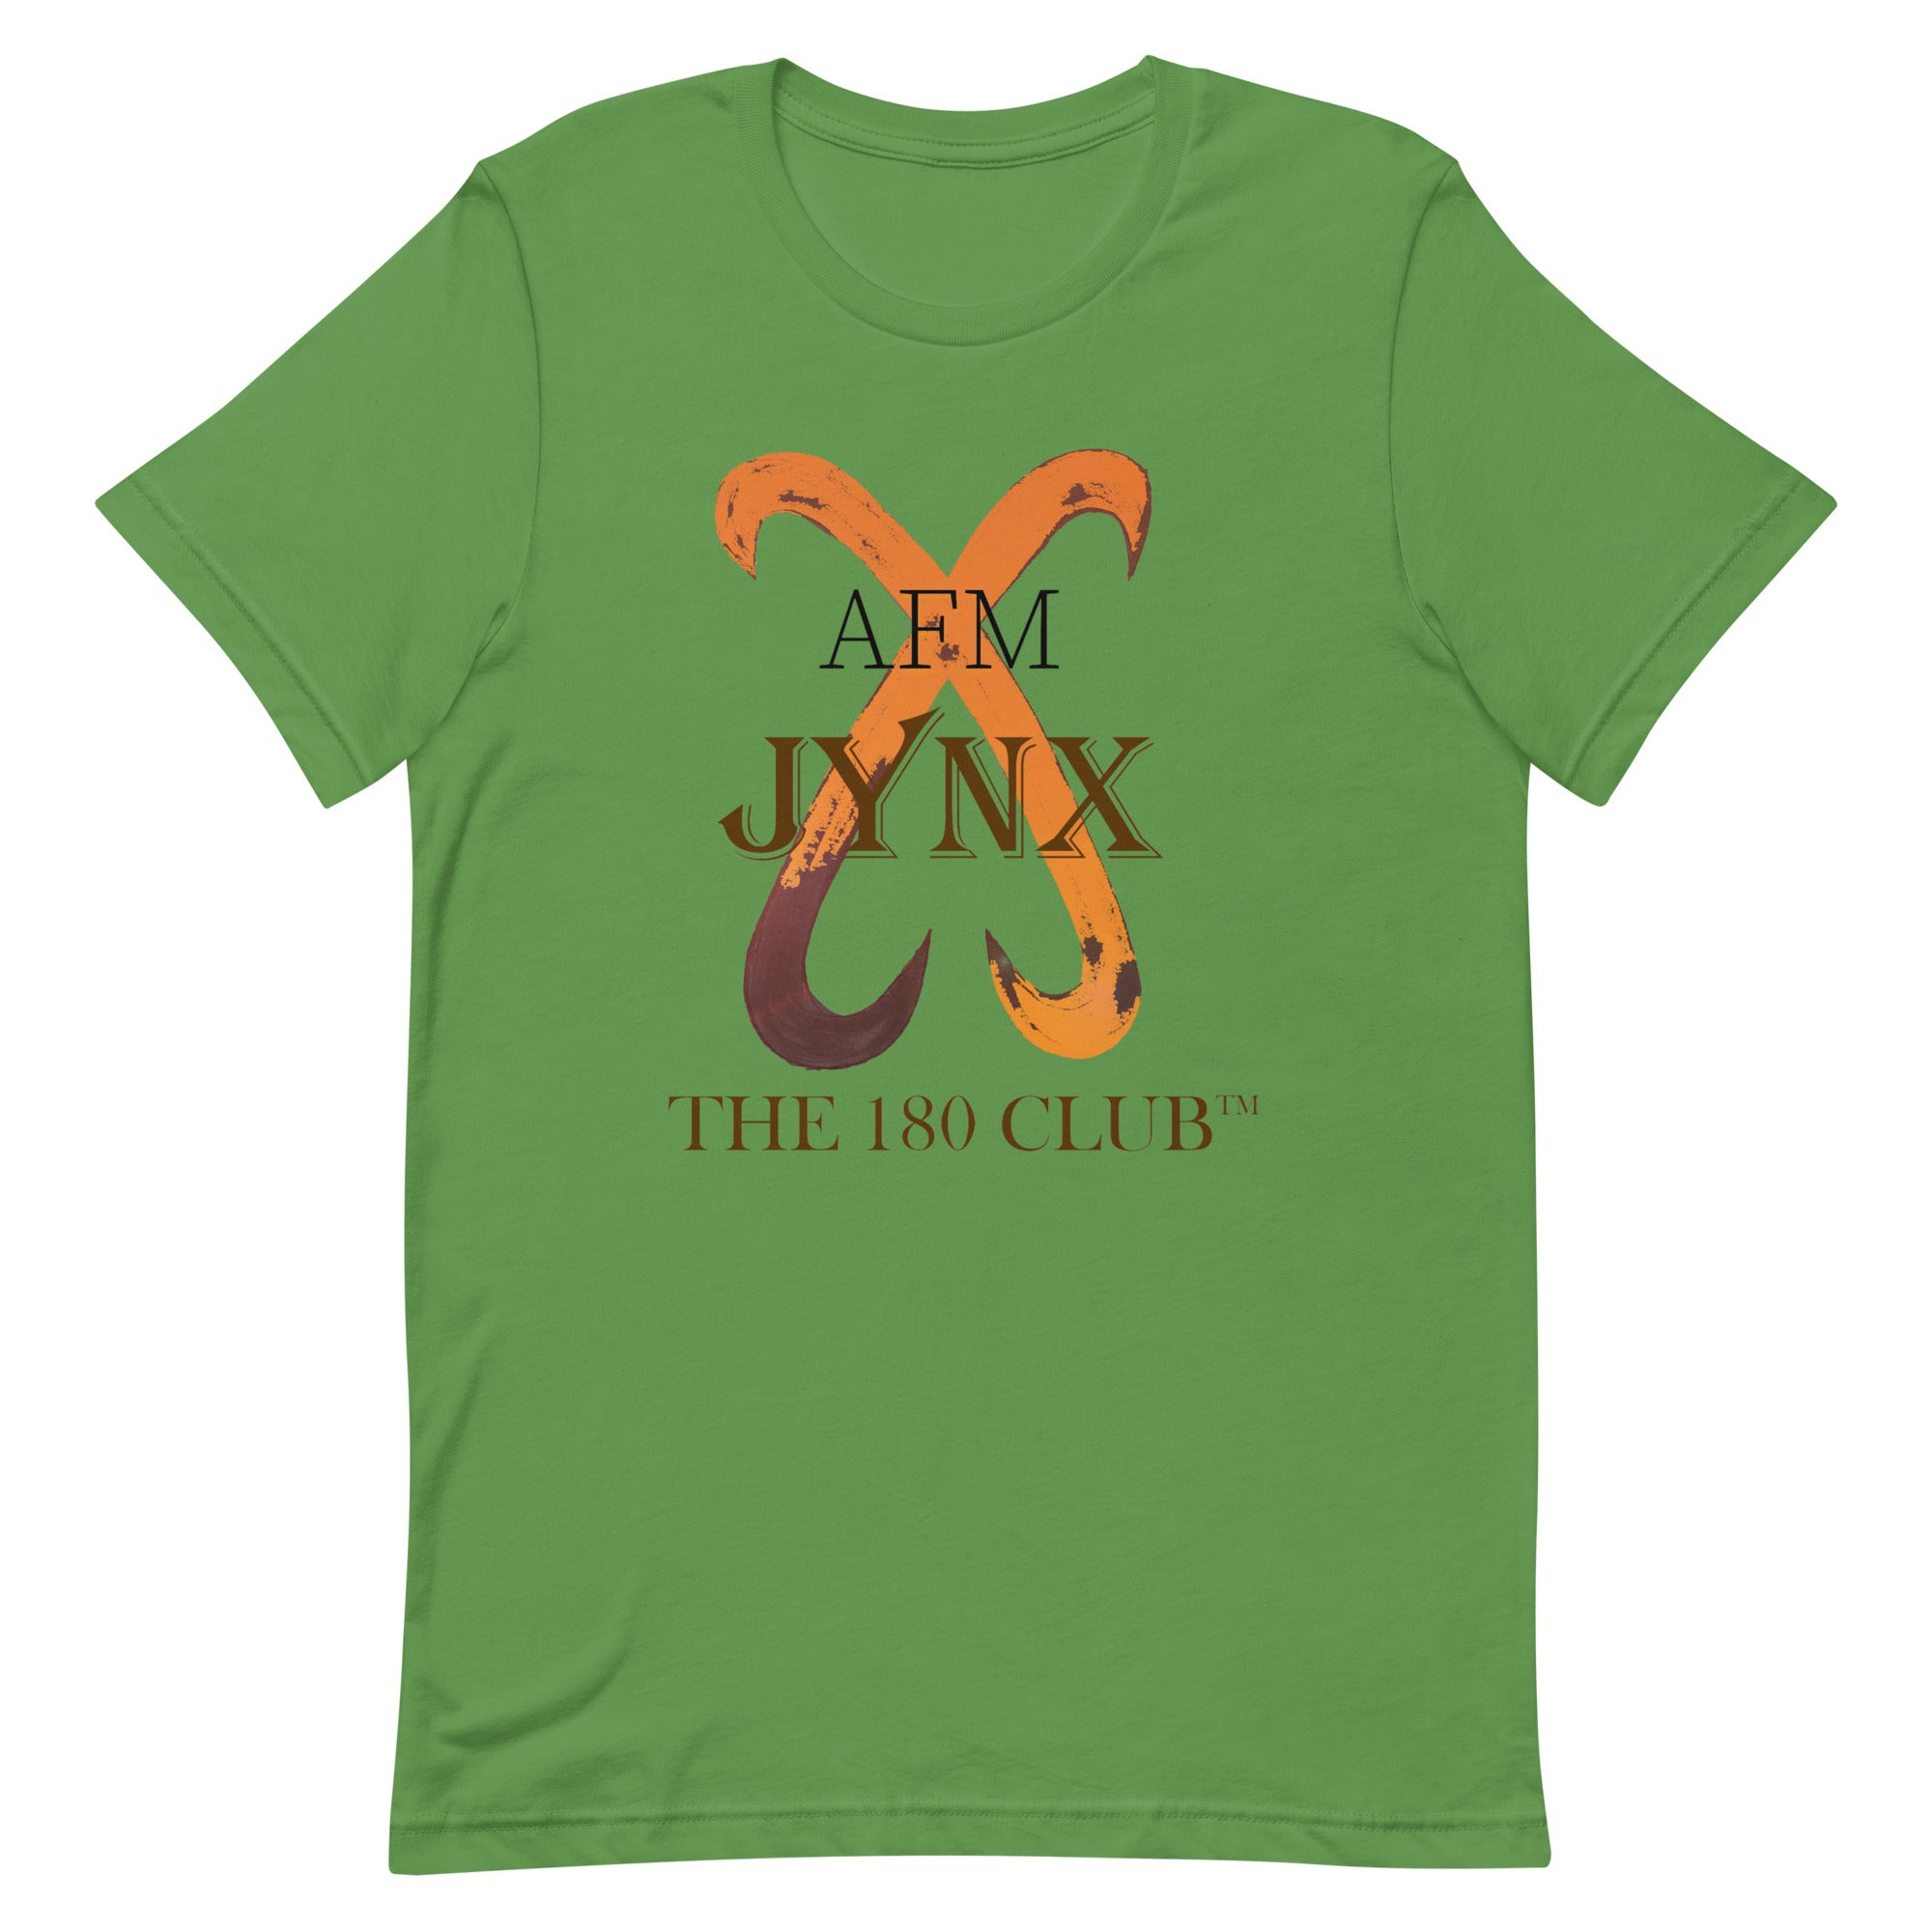 AFM JYNX - Unisex t-shirt